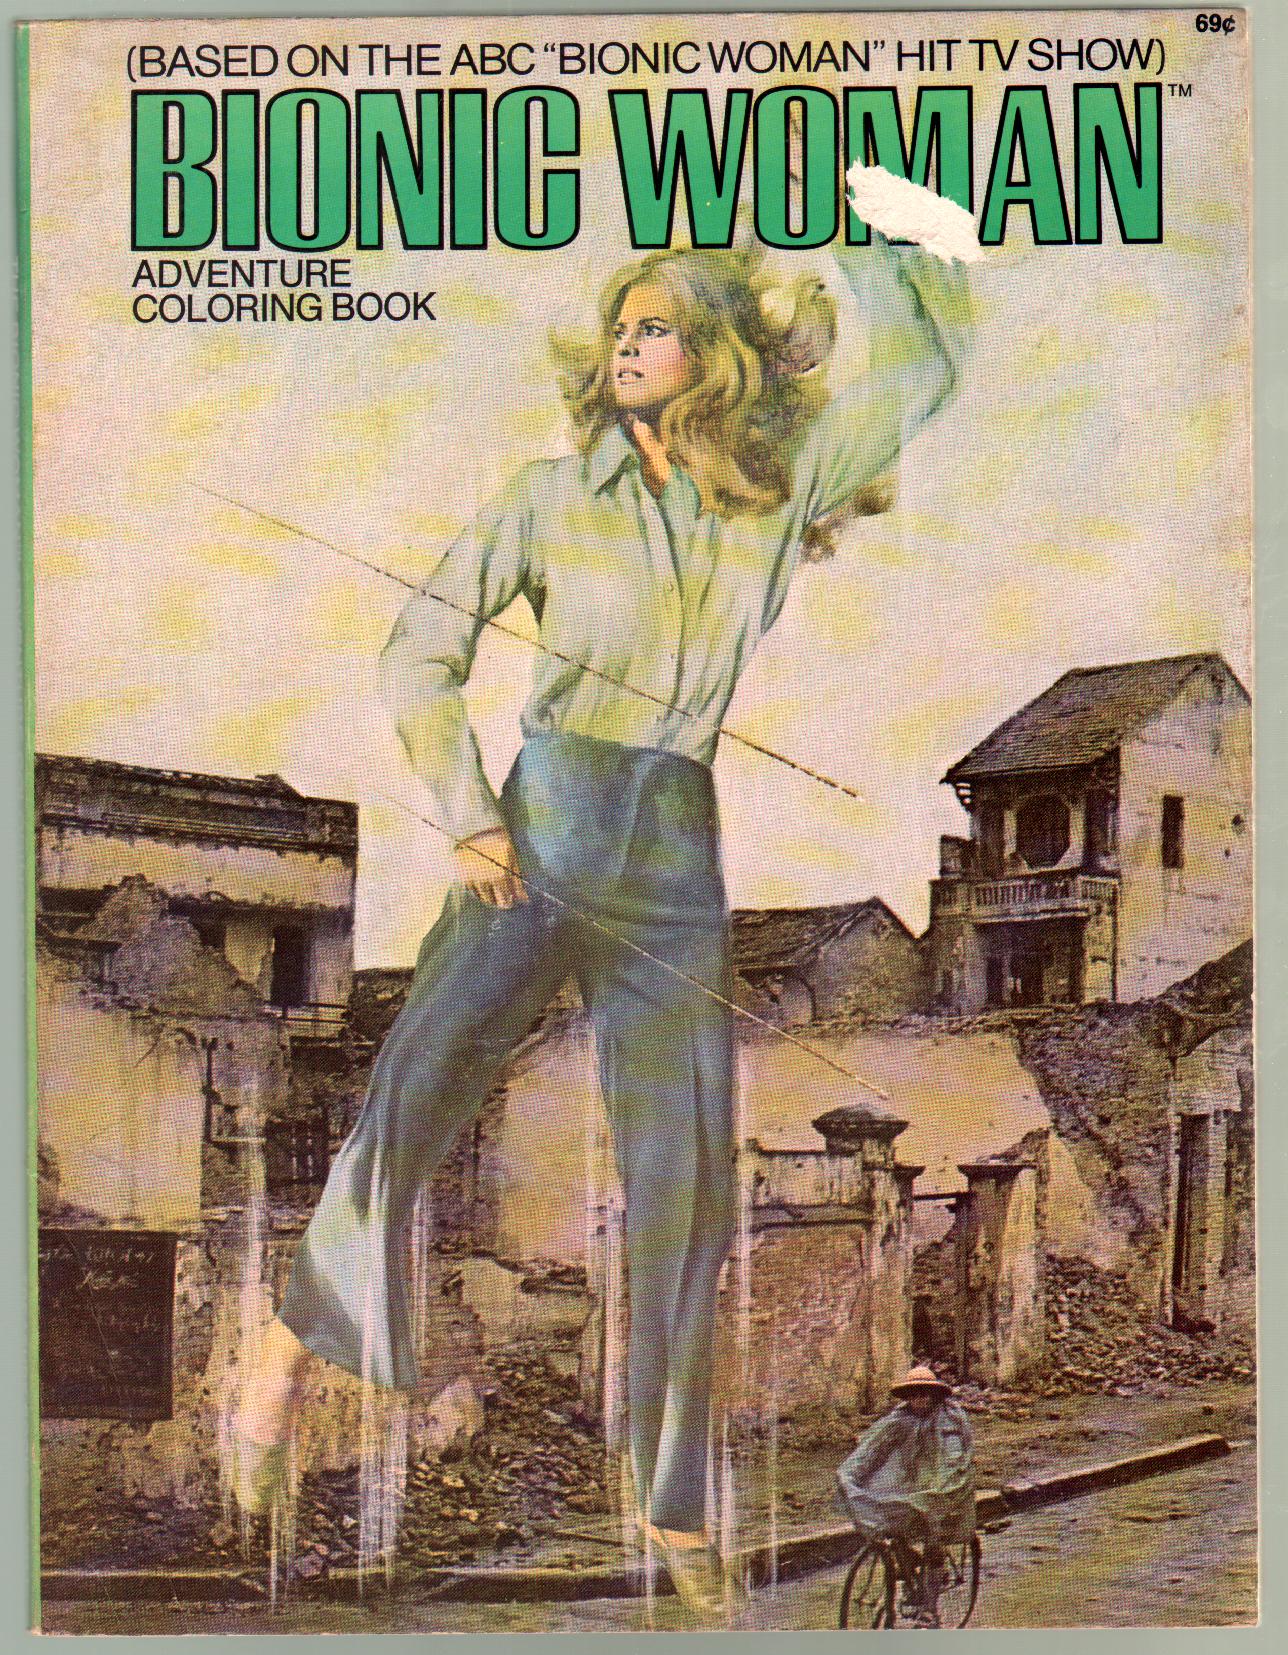 Bionic Woman Adventure Coloring Book #15011 1976-Lindsay Wagner-TV